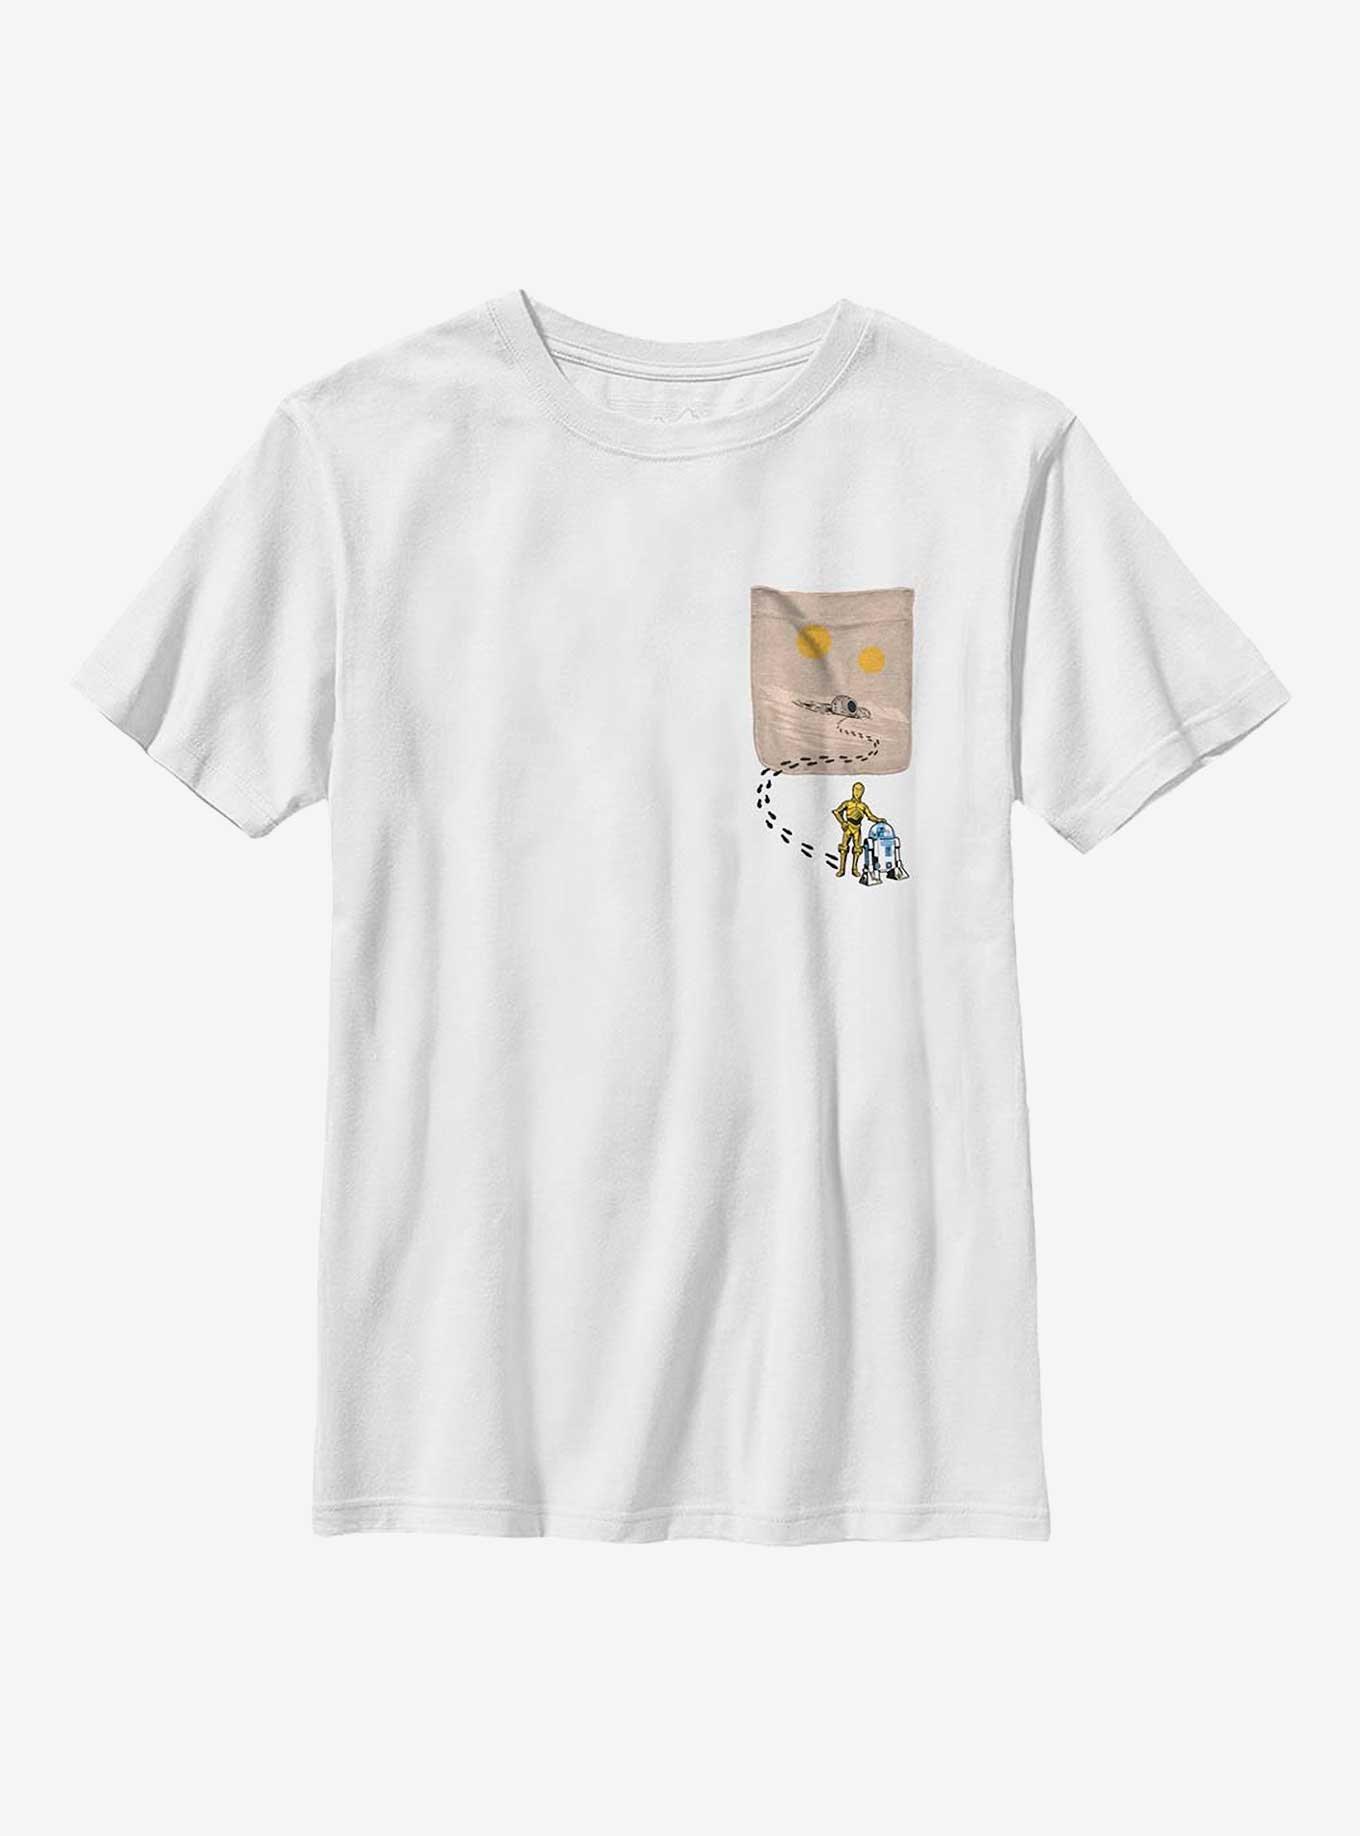 Star Wars Desert Track Youth T-Shirt, WHITE, hi-res